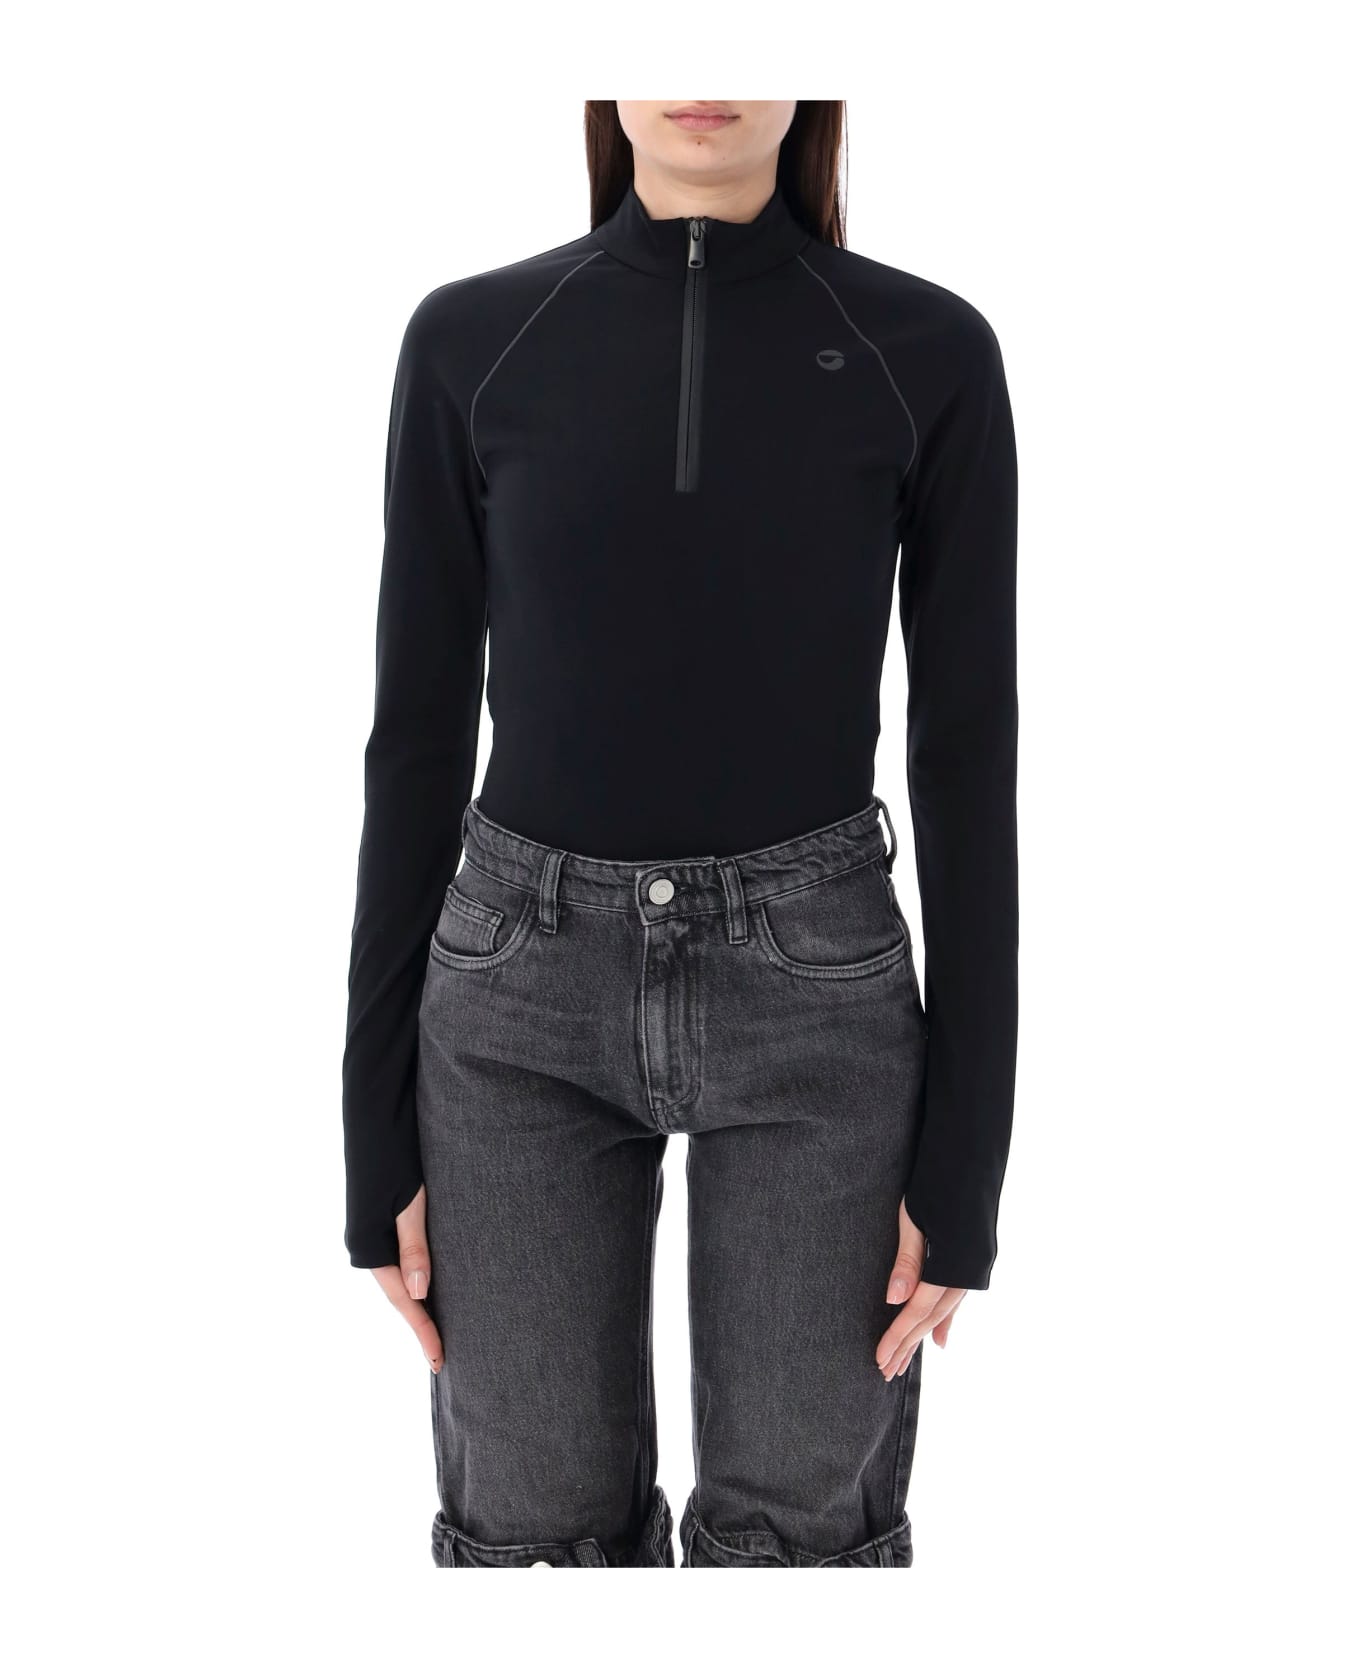 Coperni Zipped Bodysuit - BLACK